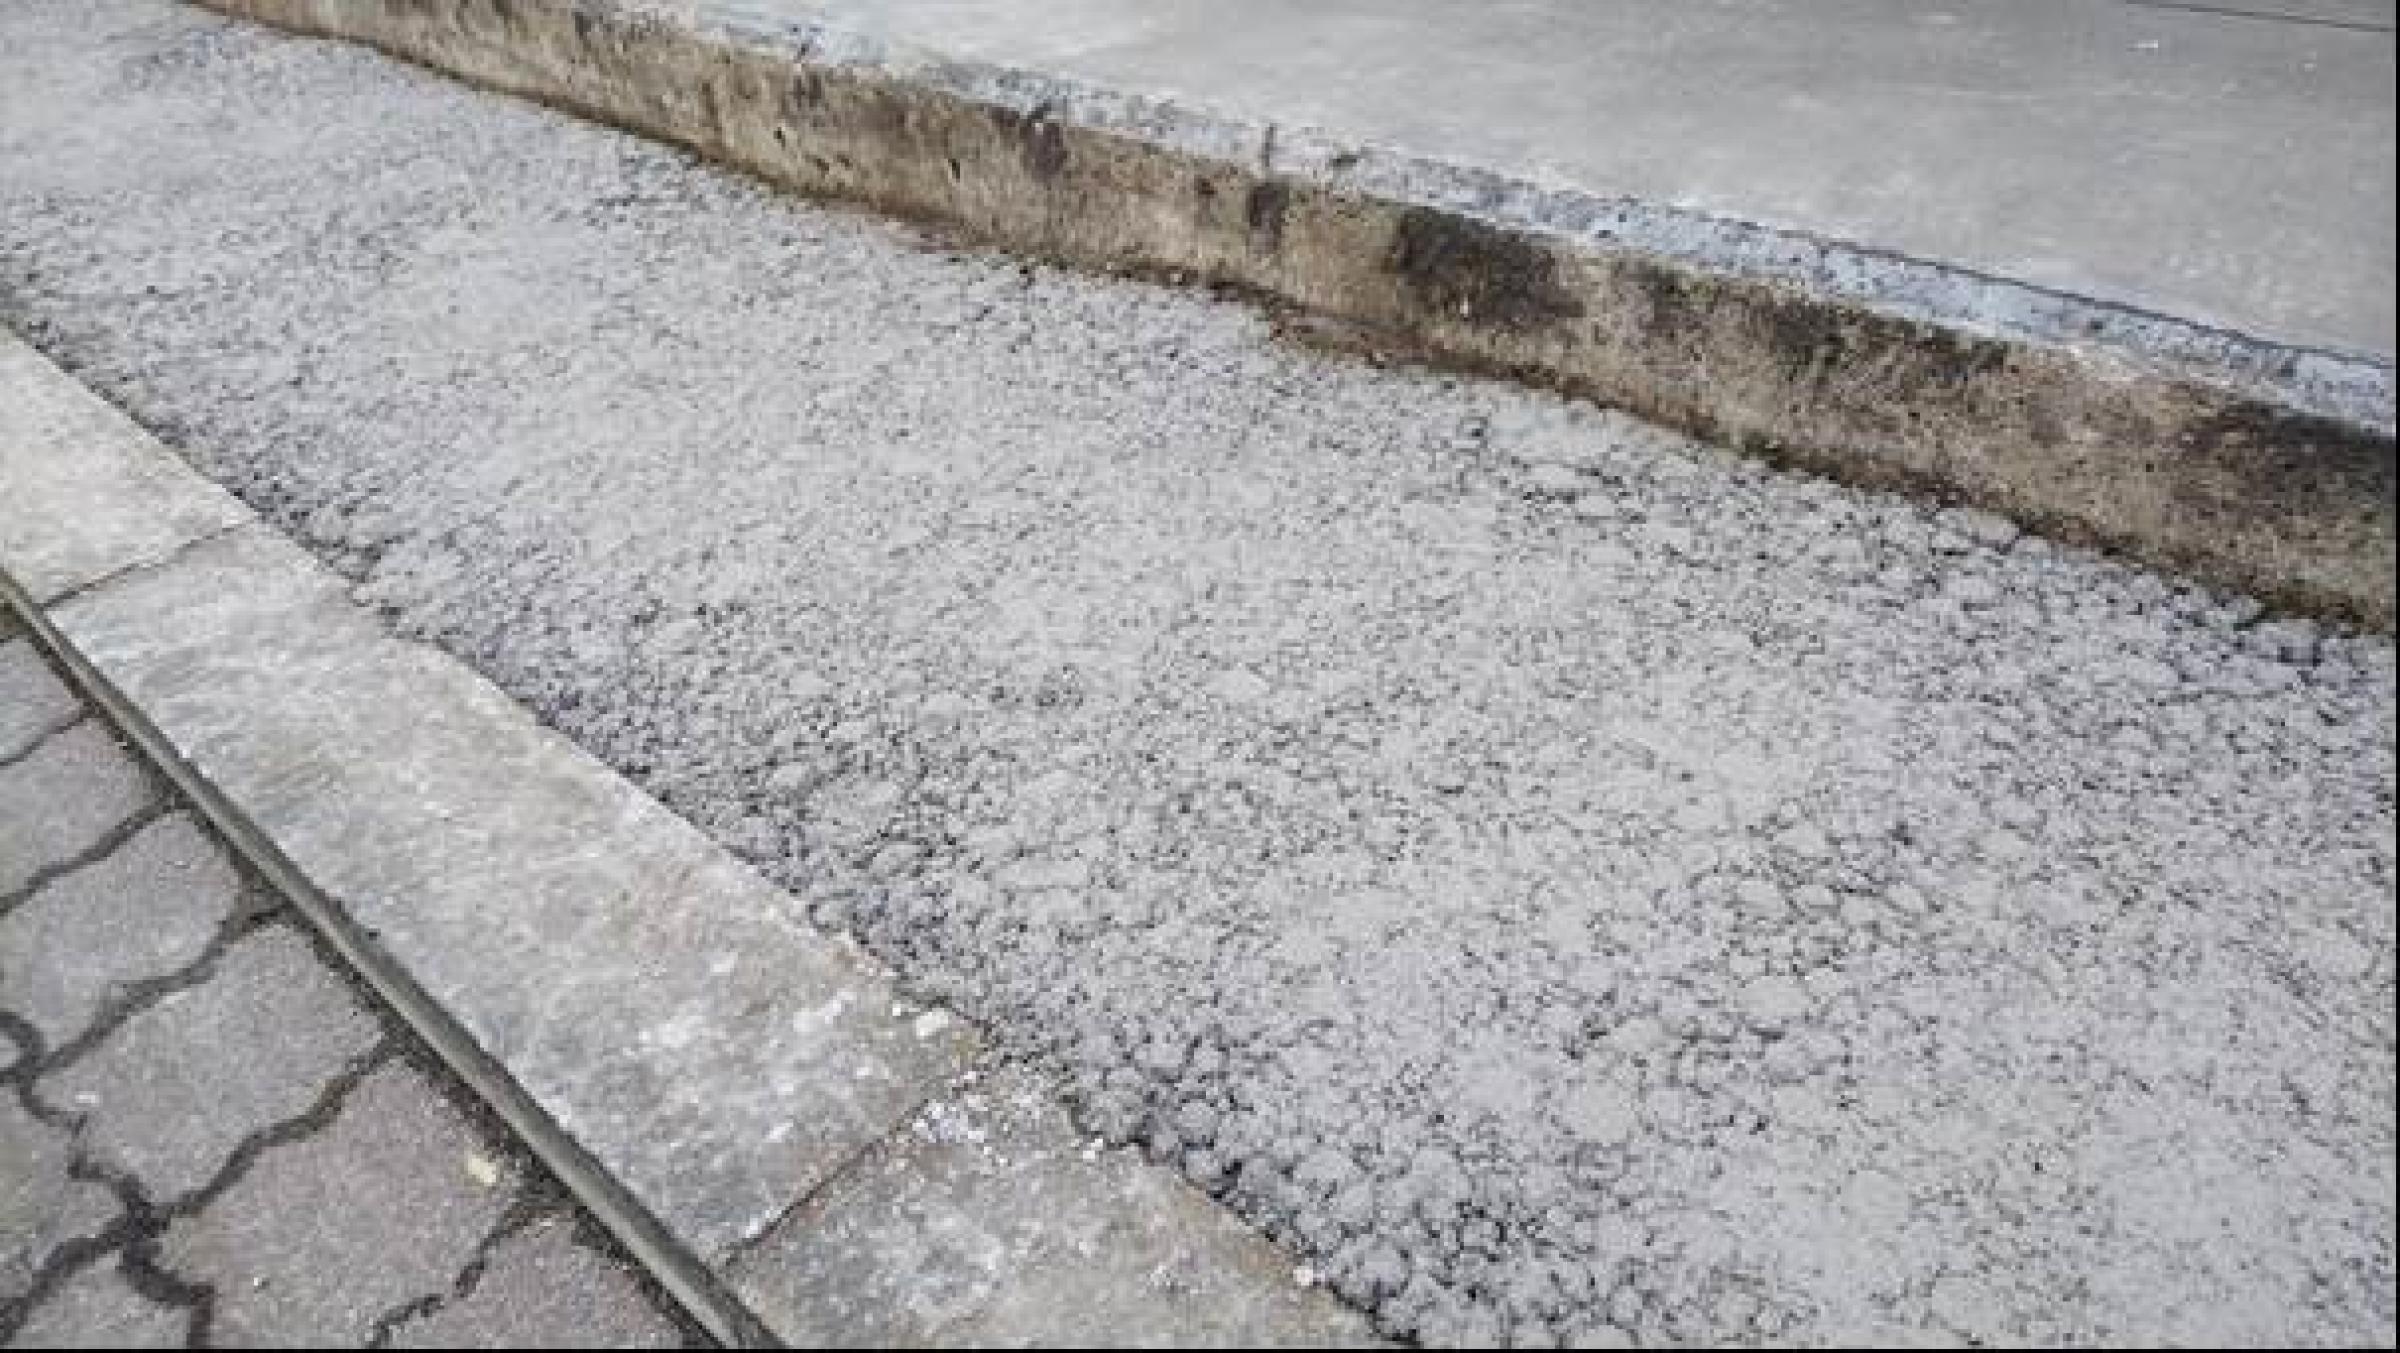 Zeroセメントの造粒ポーラスコンクリート（granZ concrete）を使用した透水性コンクリート舗装